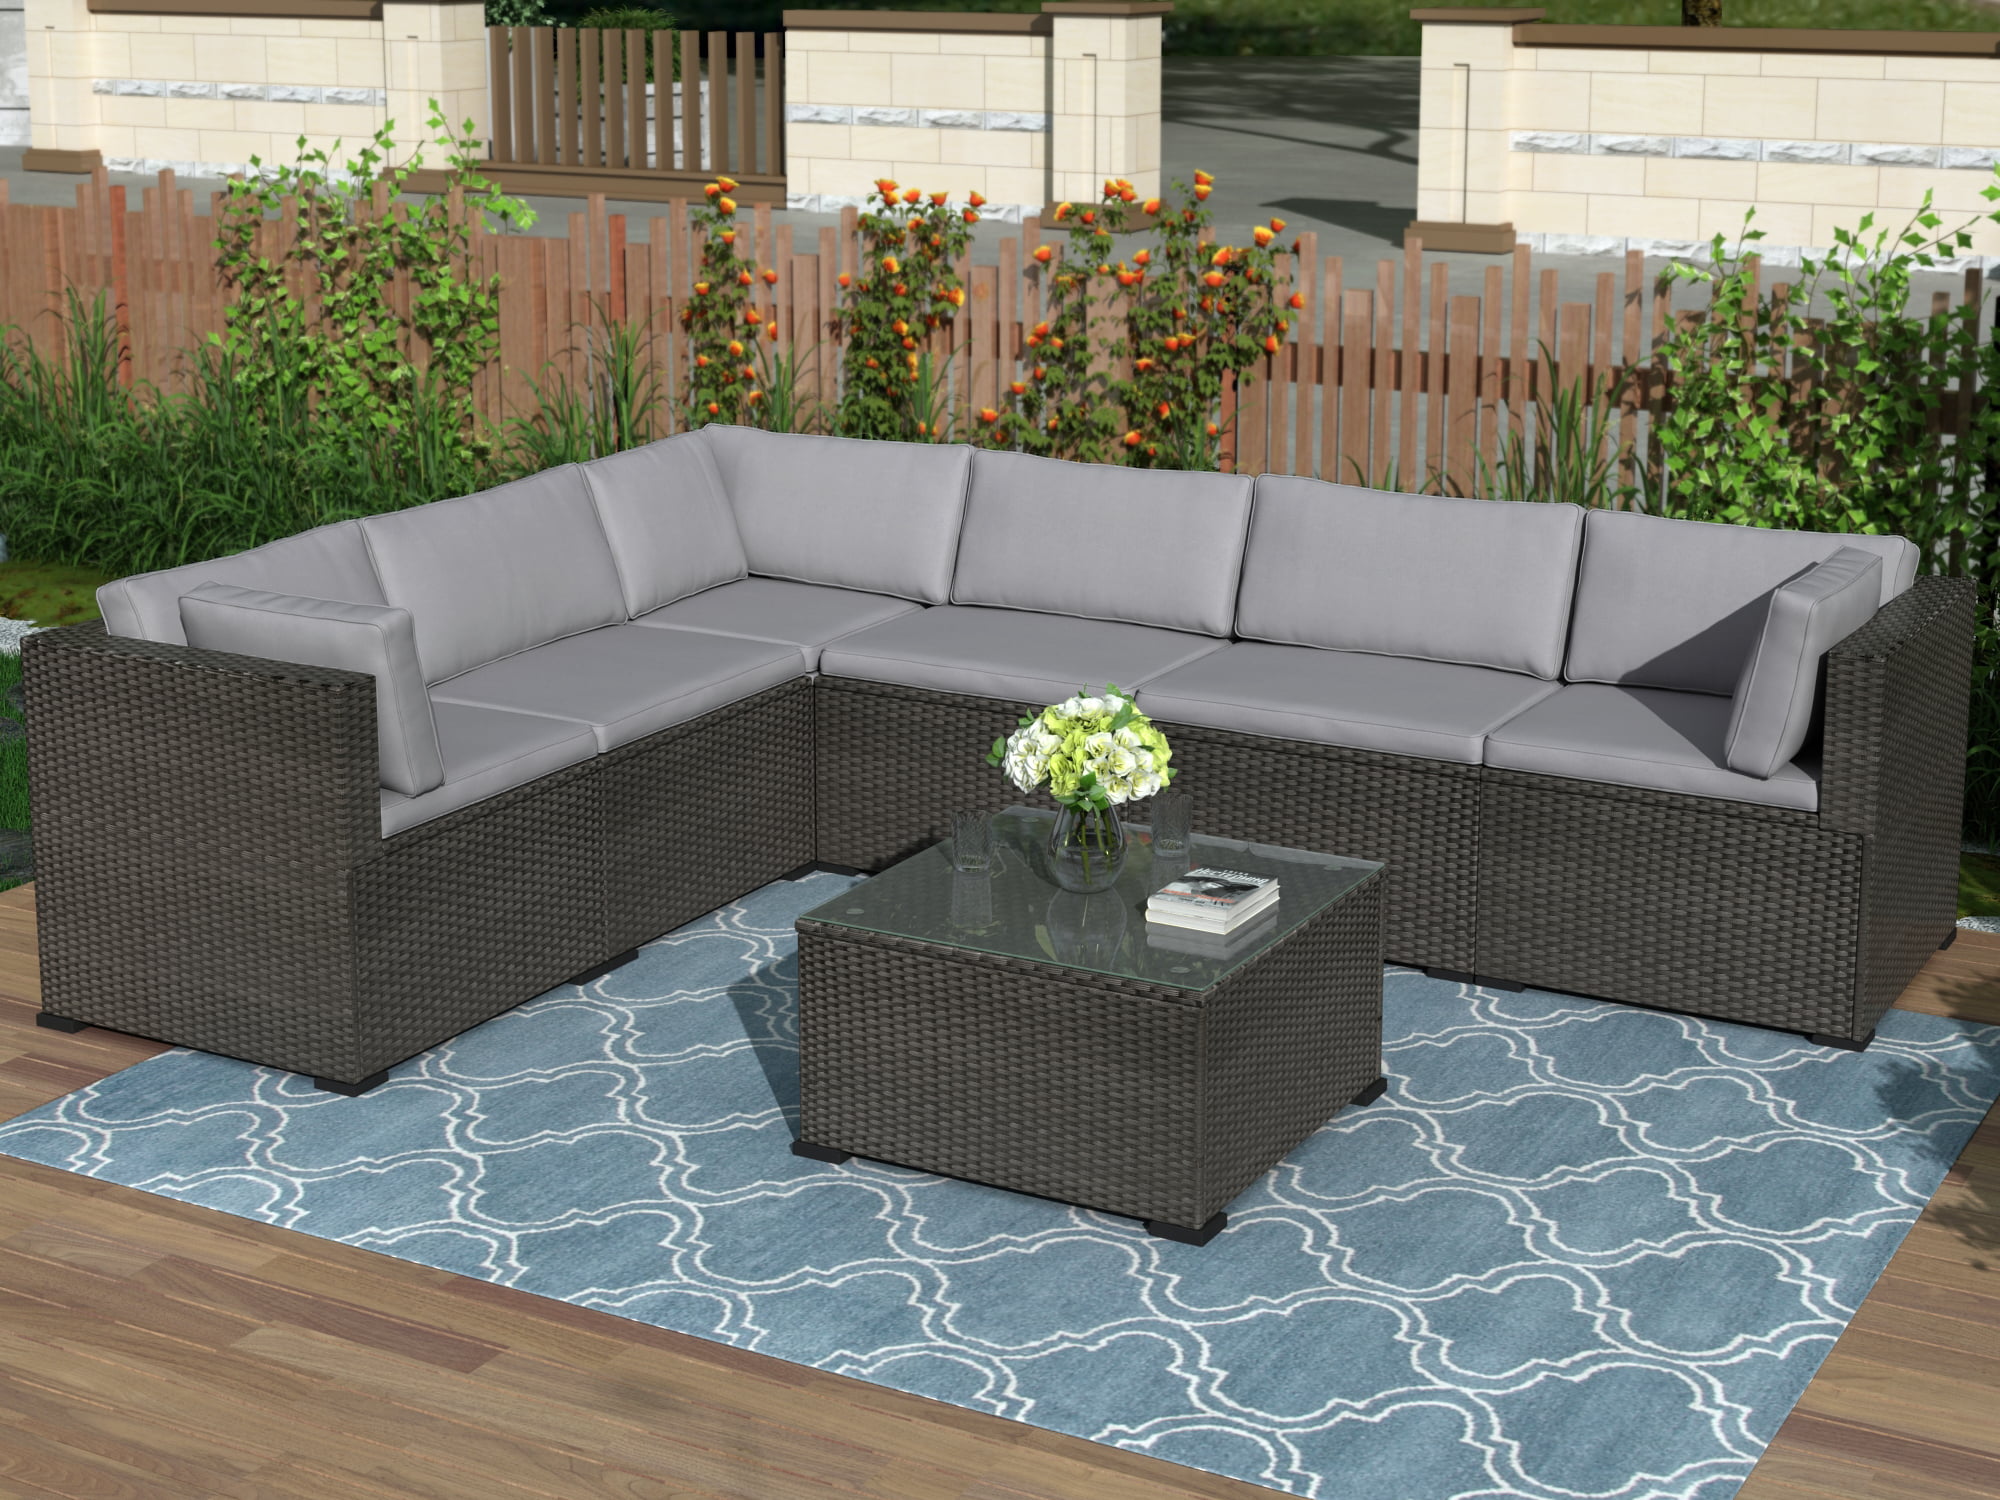 Patio Furniture Set Outdoor Sectional Conversation Set, 7 PCS Outdoor